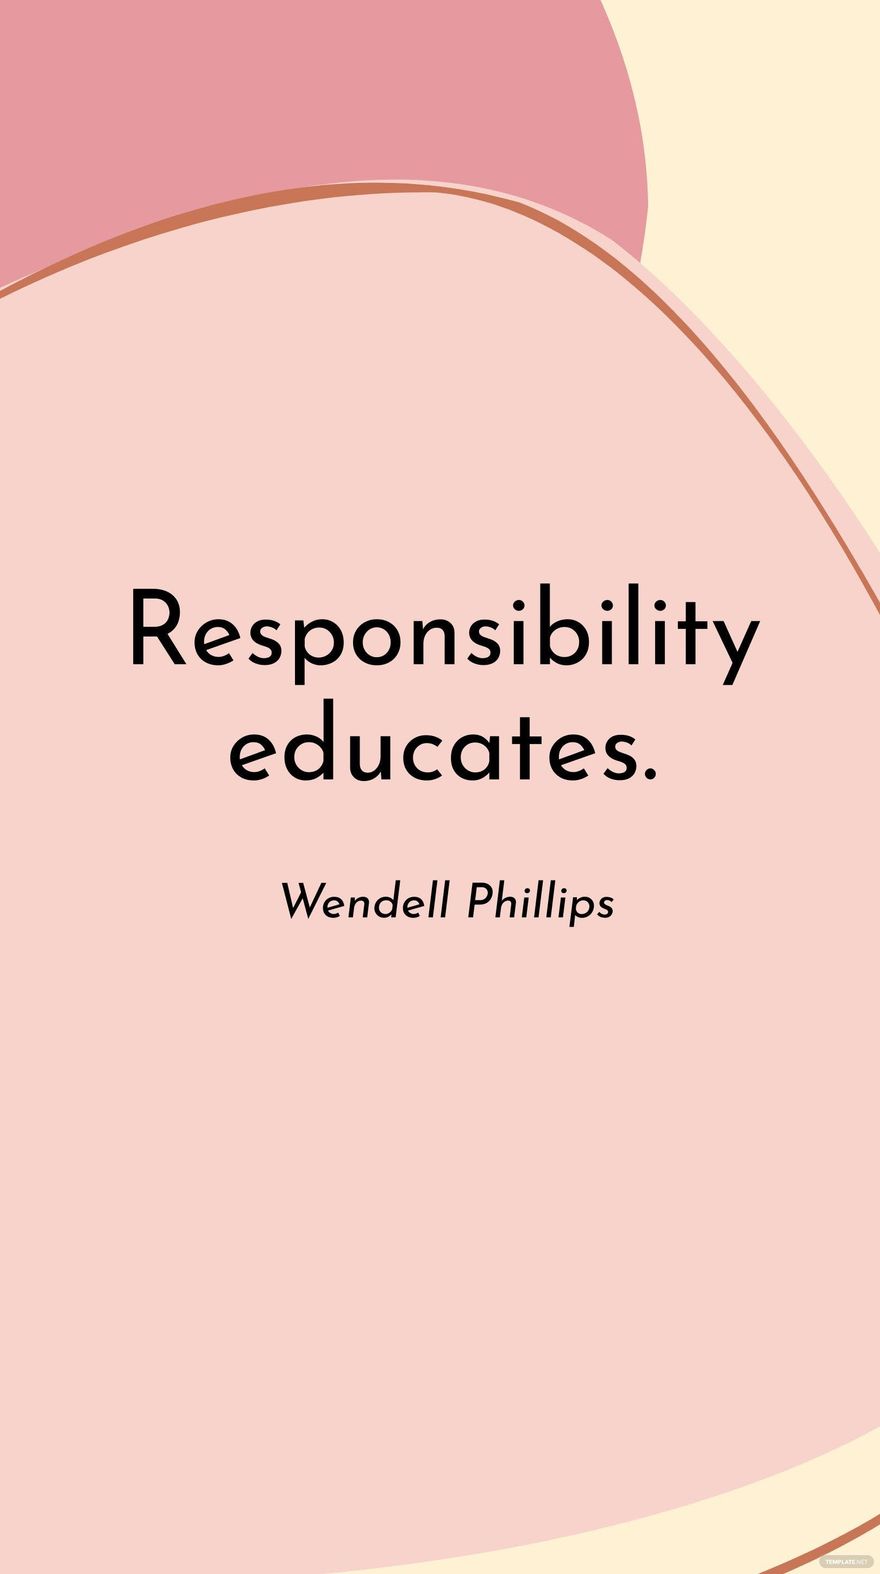 Wendell Phillips - Responsibility educates. in JPG